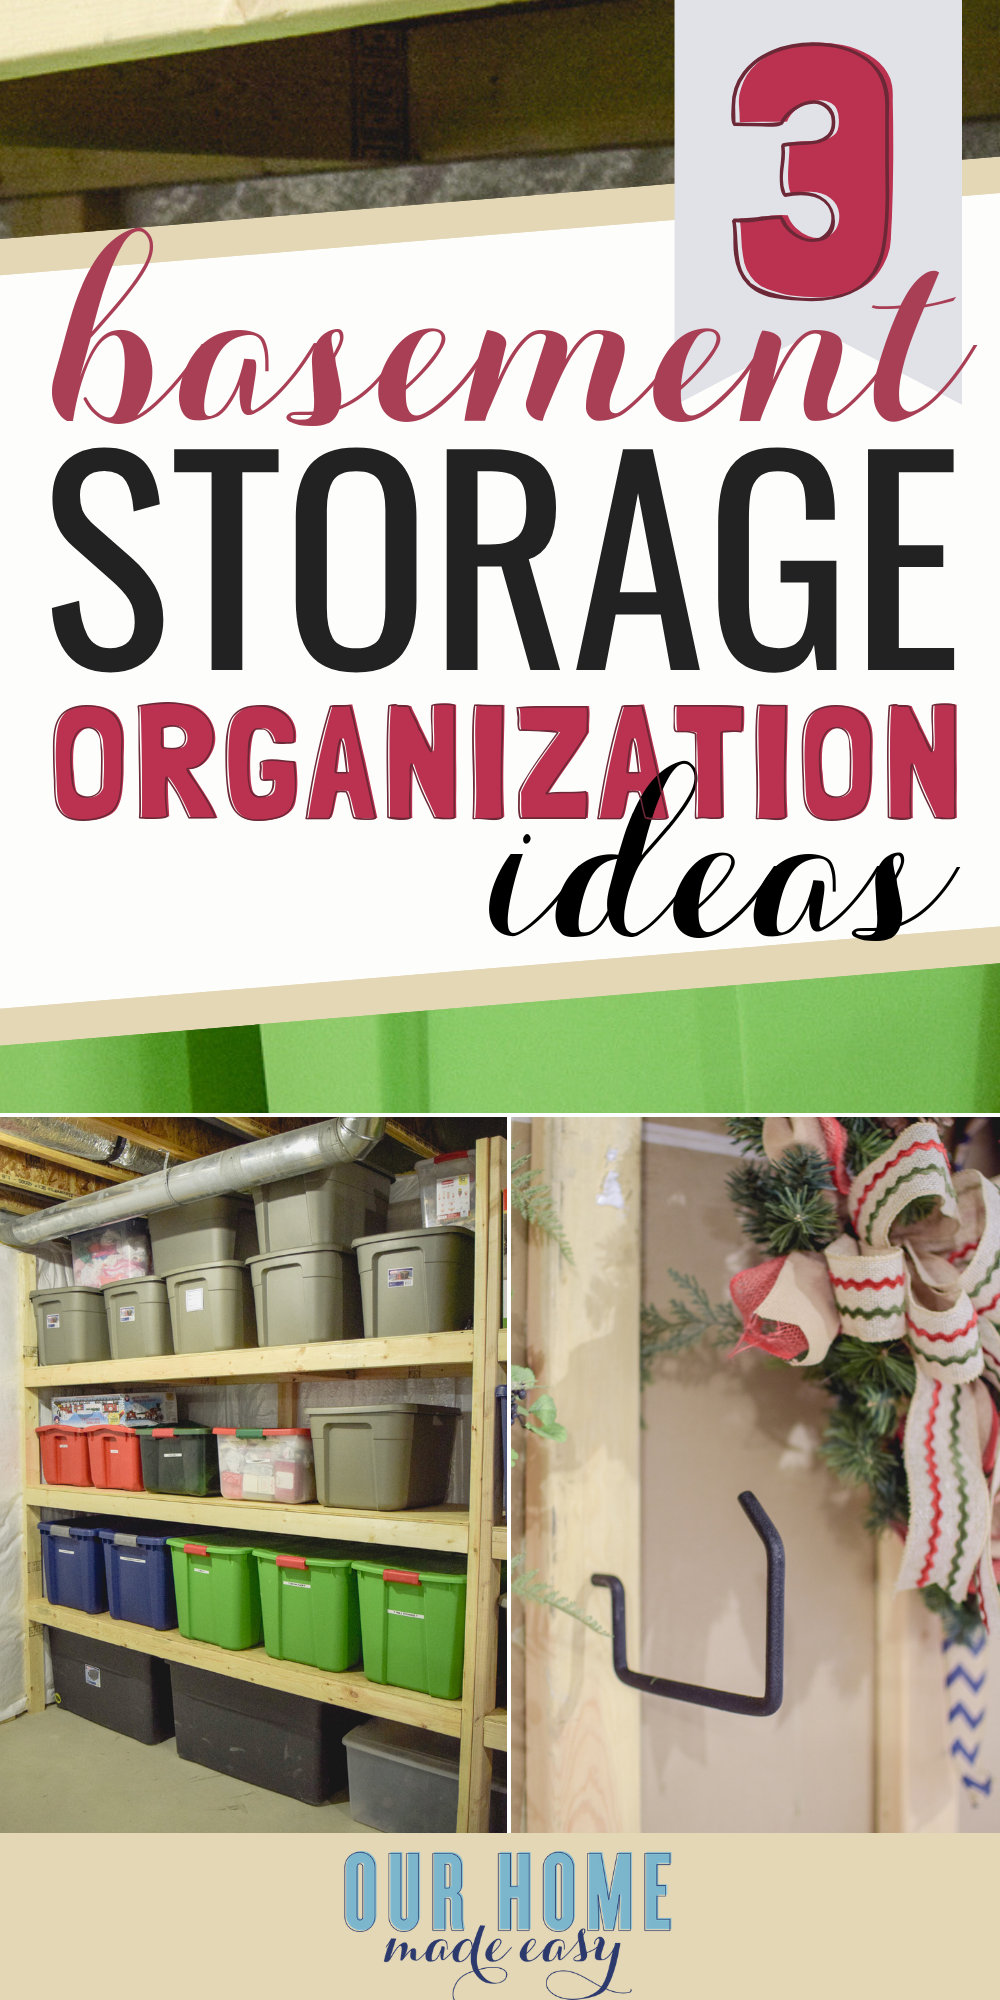 https://www.ourhomemadeeasy.com/wp-content/uploads/2019/02/Basement-Storage-Organizing-Ideas.png